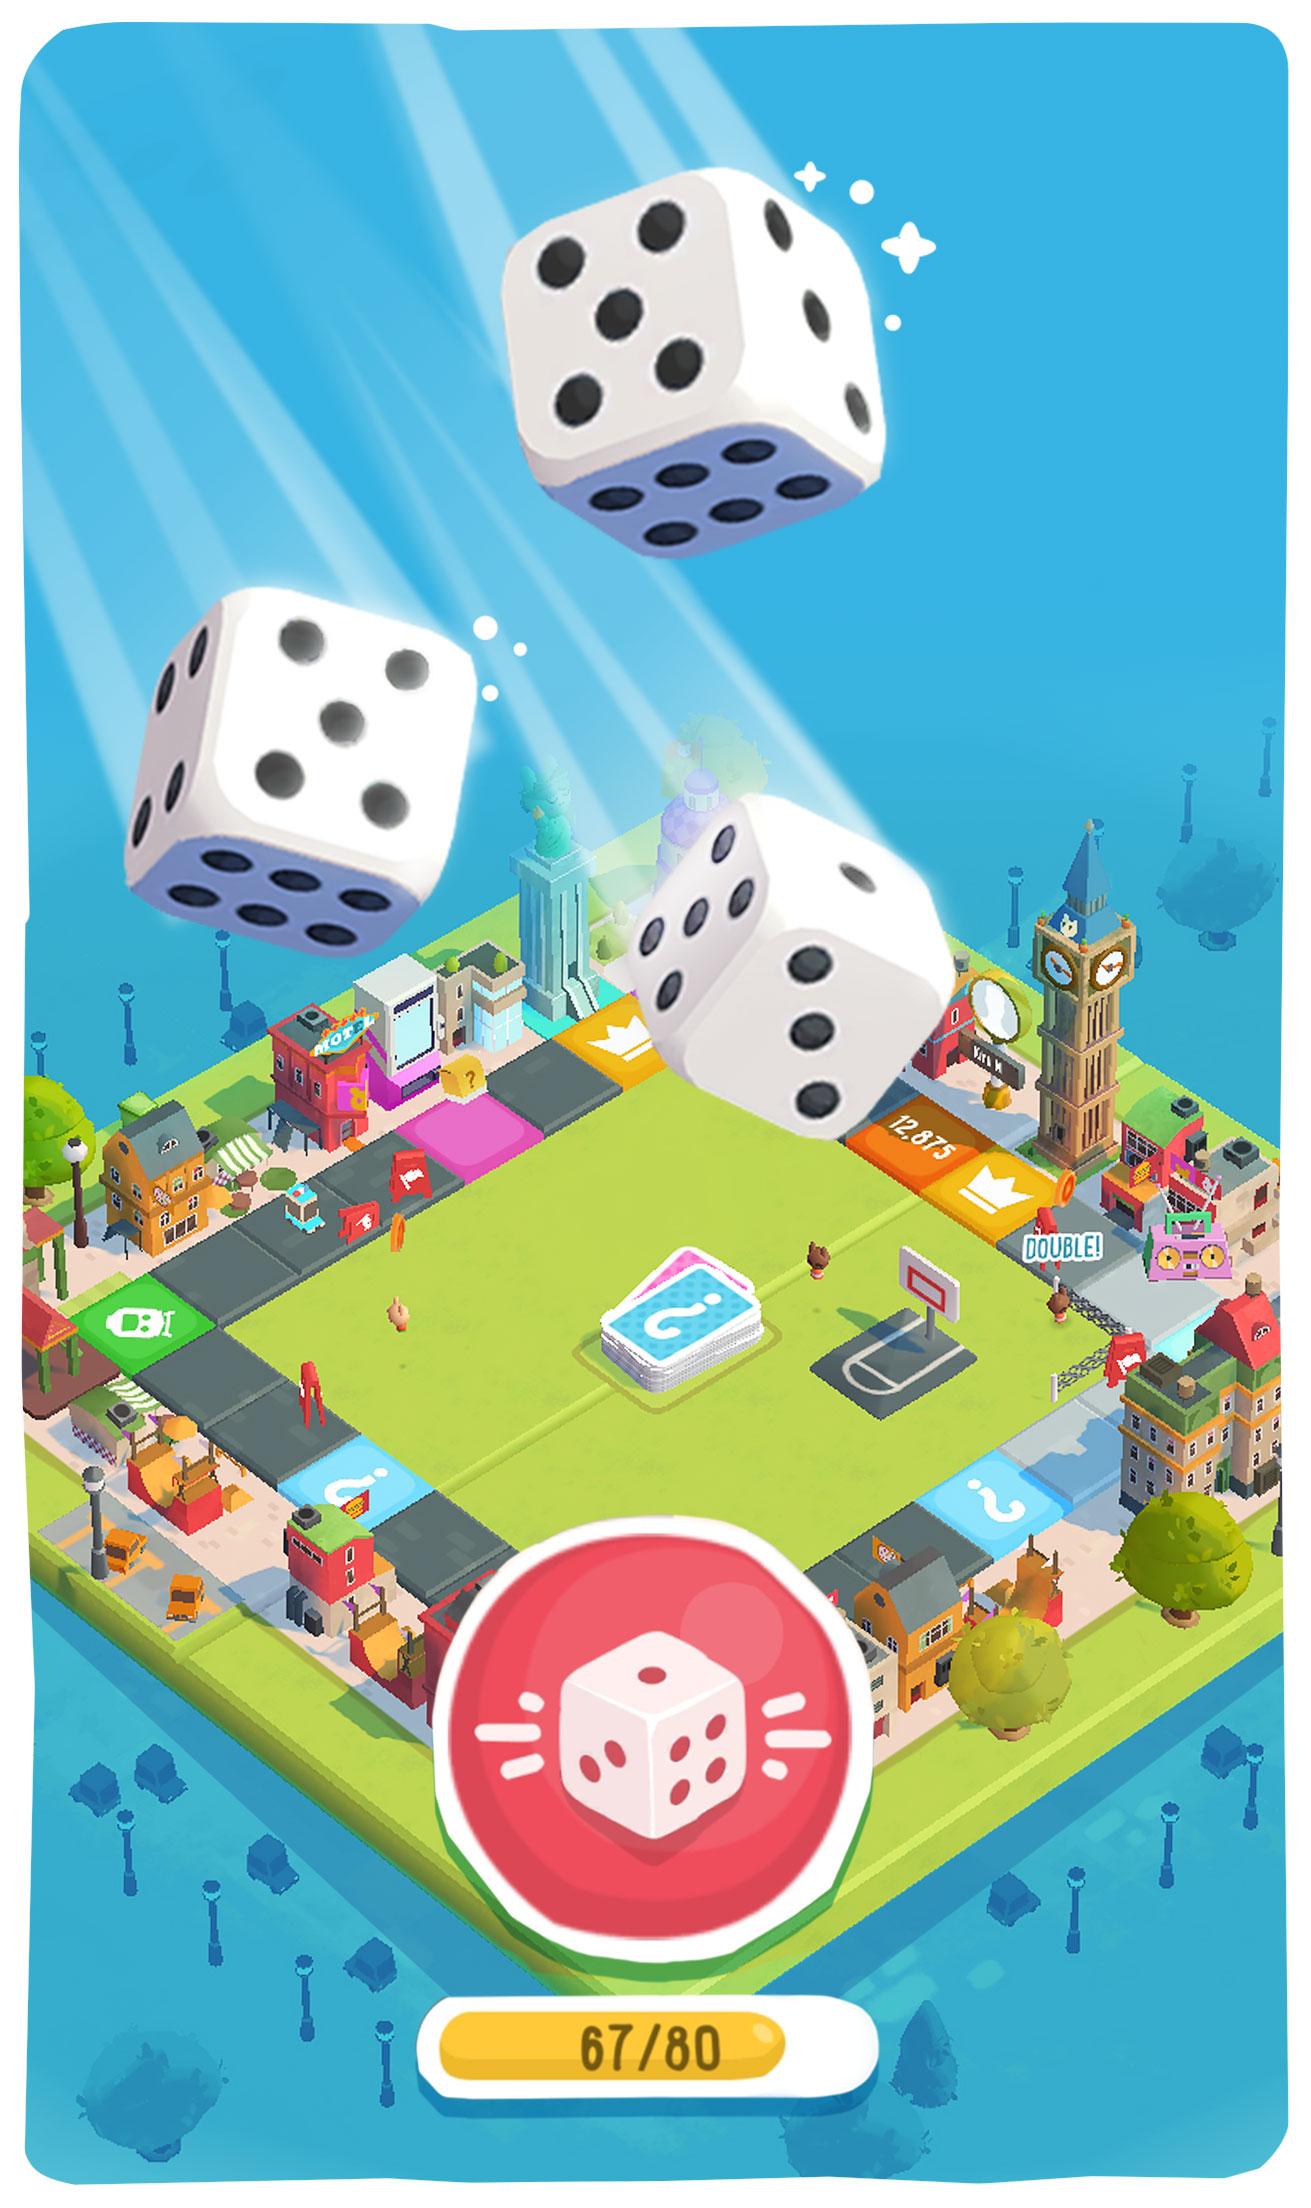 Board Kings™️ - Online Multiplayer Board Game 3.45.0 Screenshot 17